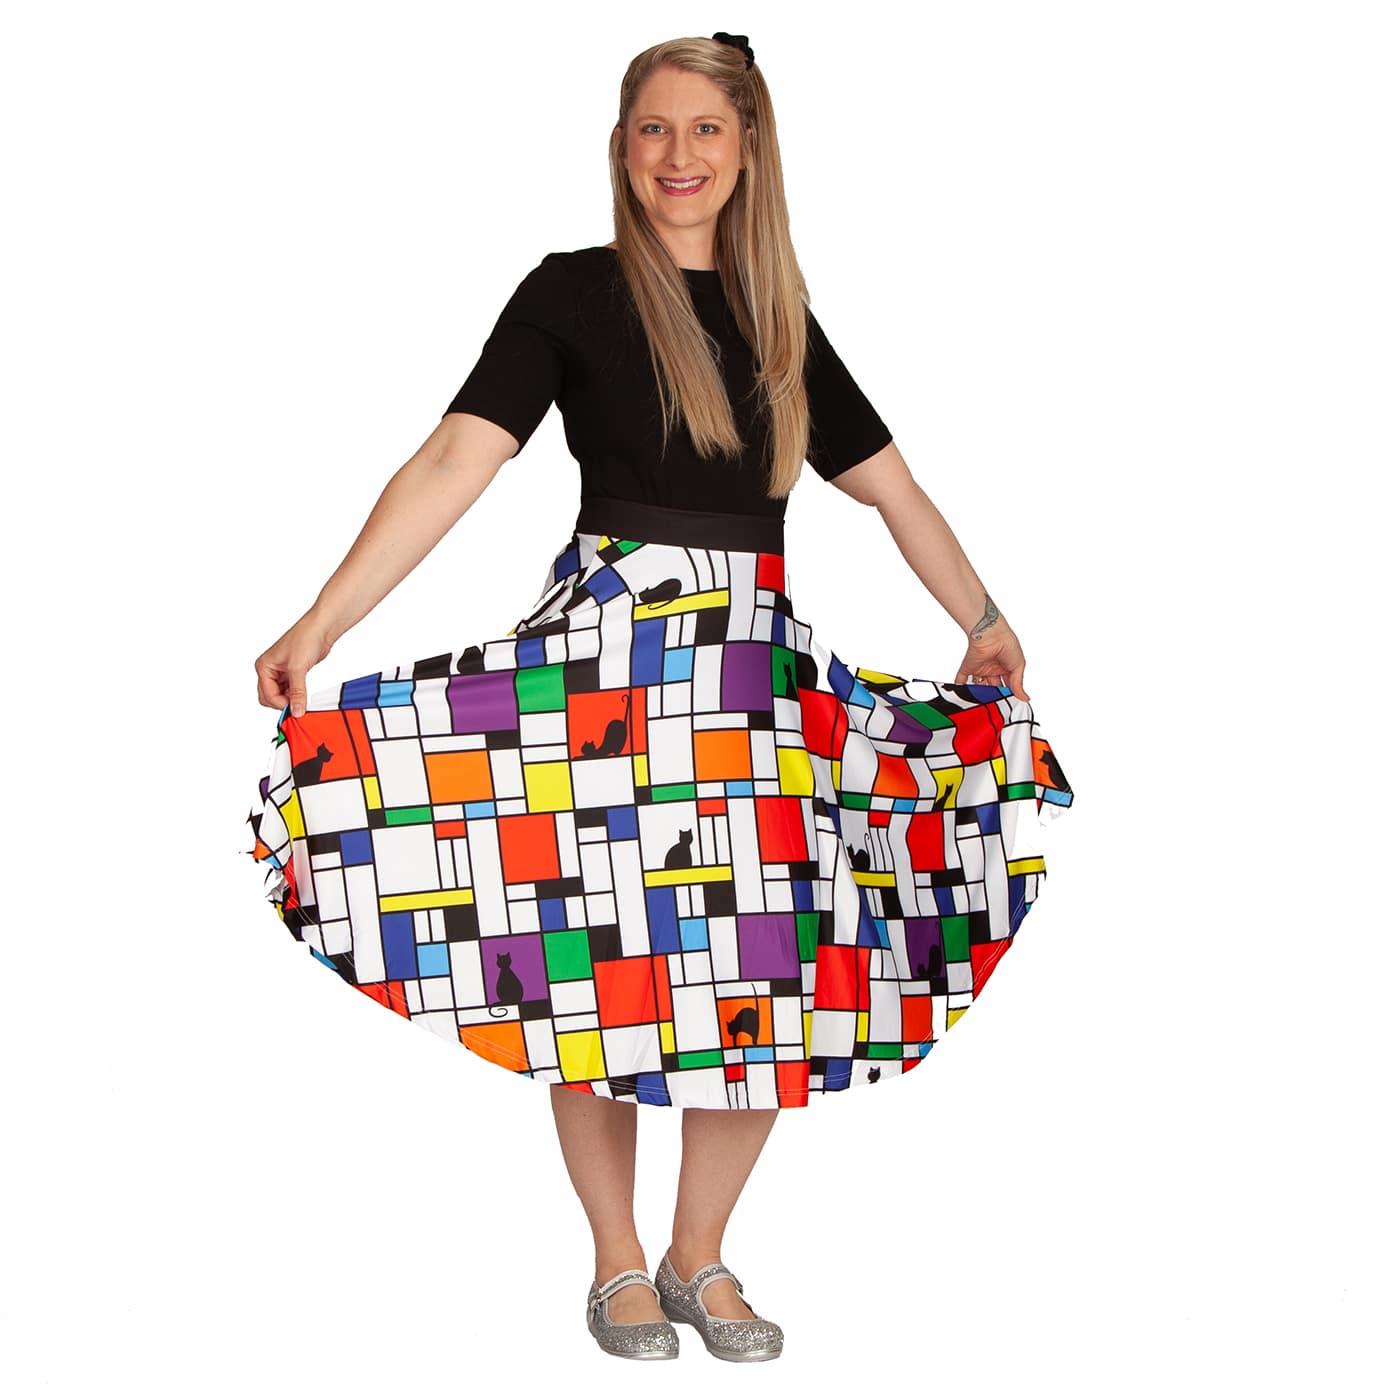 Intrigue Swishy Skirt by RainbowsAndFairies.com.au (Black Cats - Mondrian Art - Skirt With Pockets - Circle Skirt - Vintage Inspired - Mod Retro) - SKU: CL_SWISH_INTRG_ORG - Pic-06